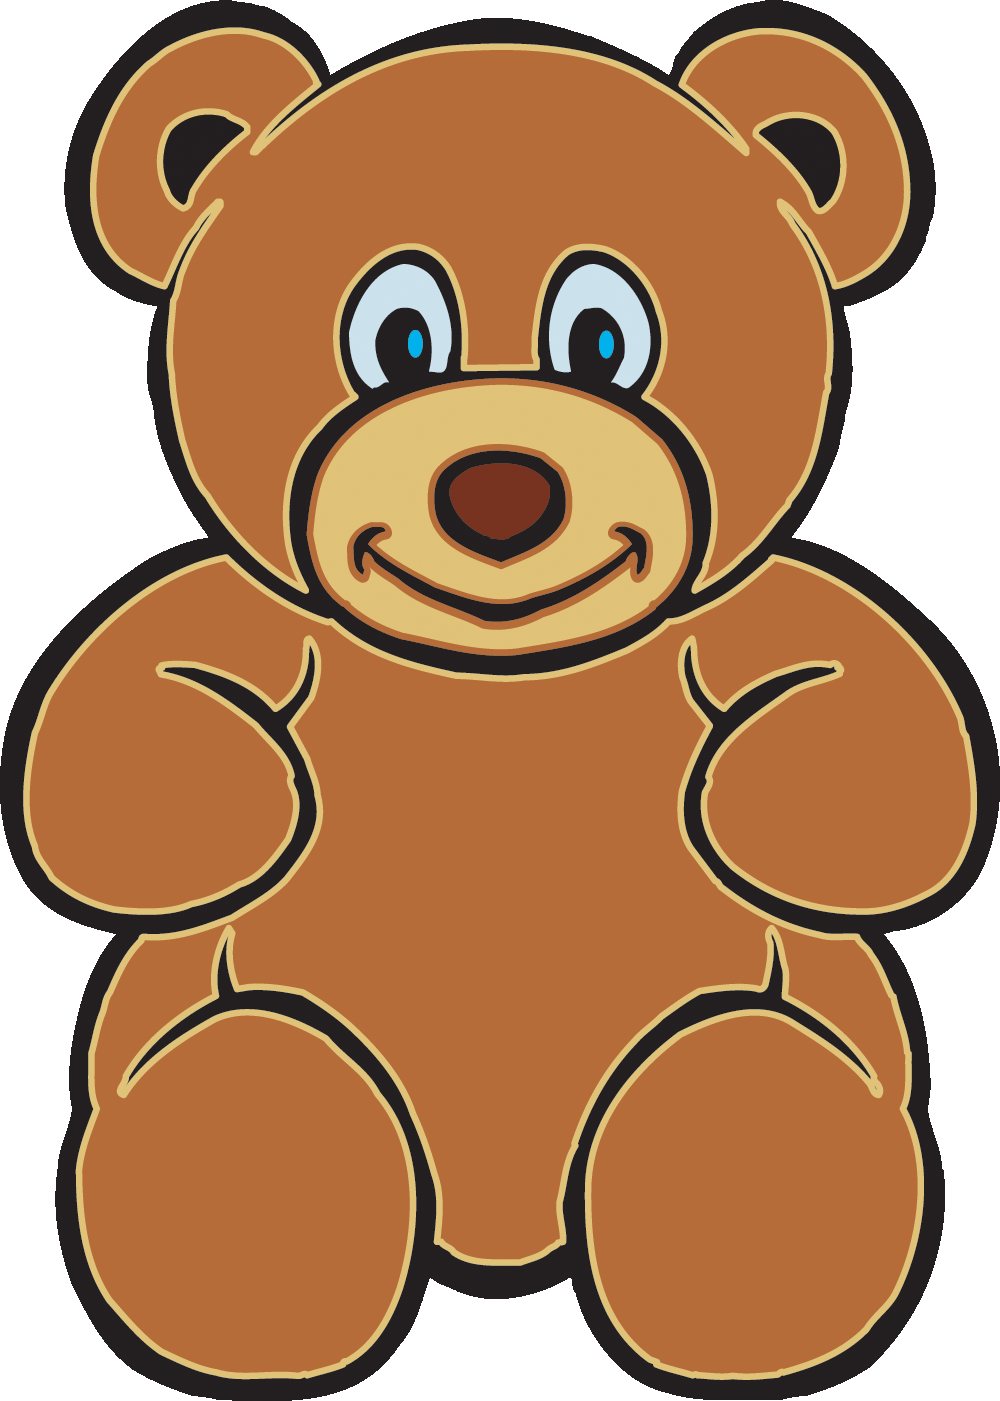 Brown Bear clipart #5, Download drawings